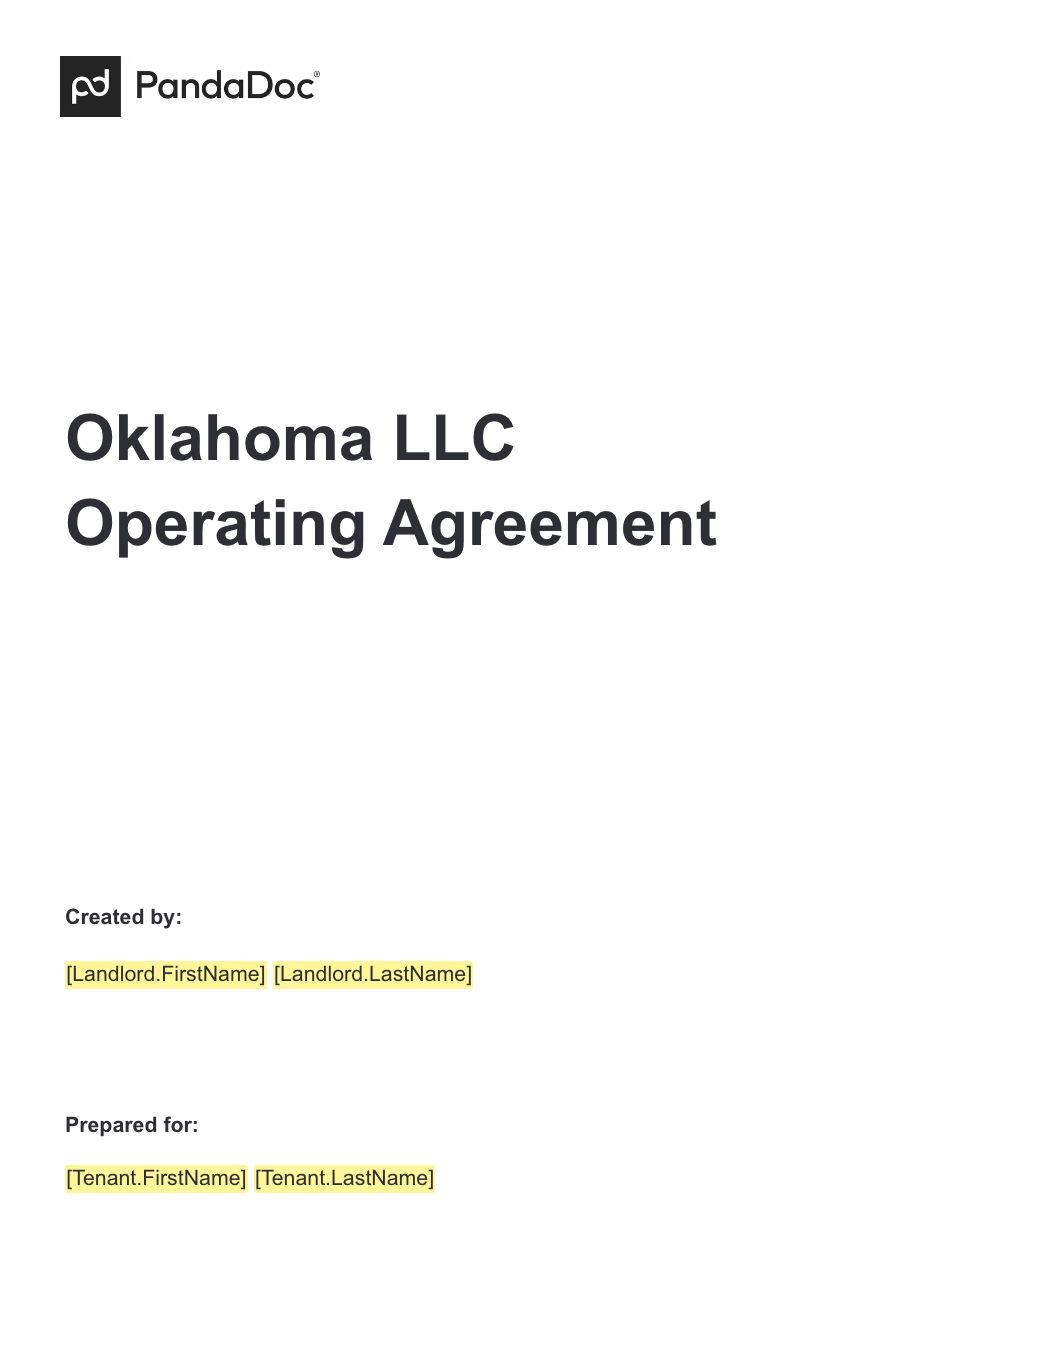 Oklahoma LLC Operating Agreement 